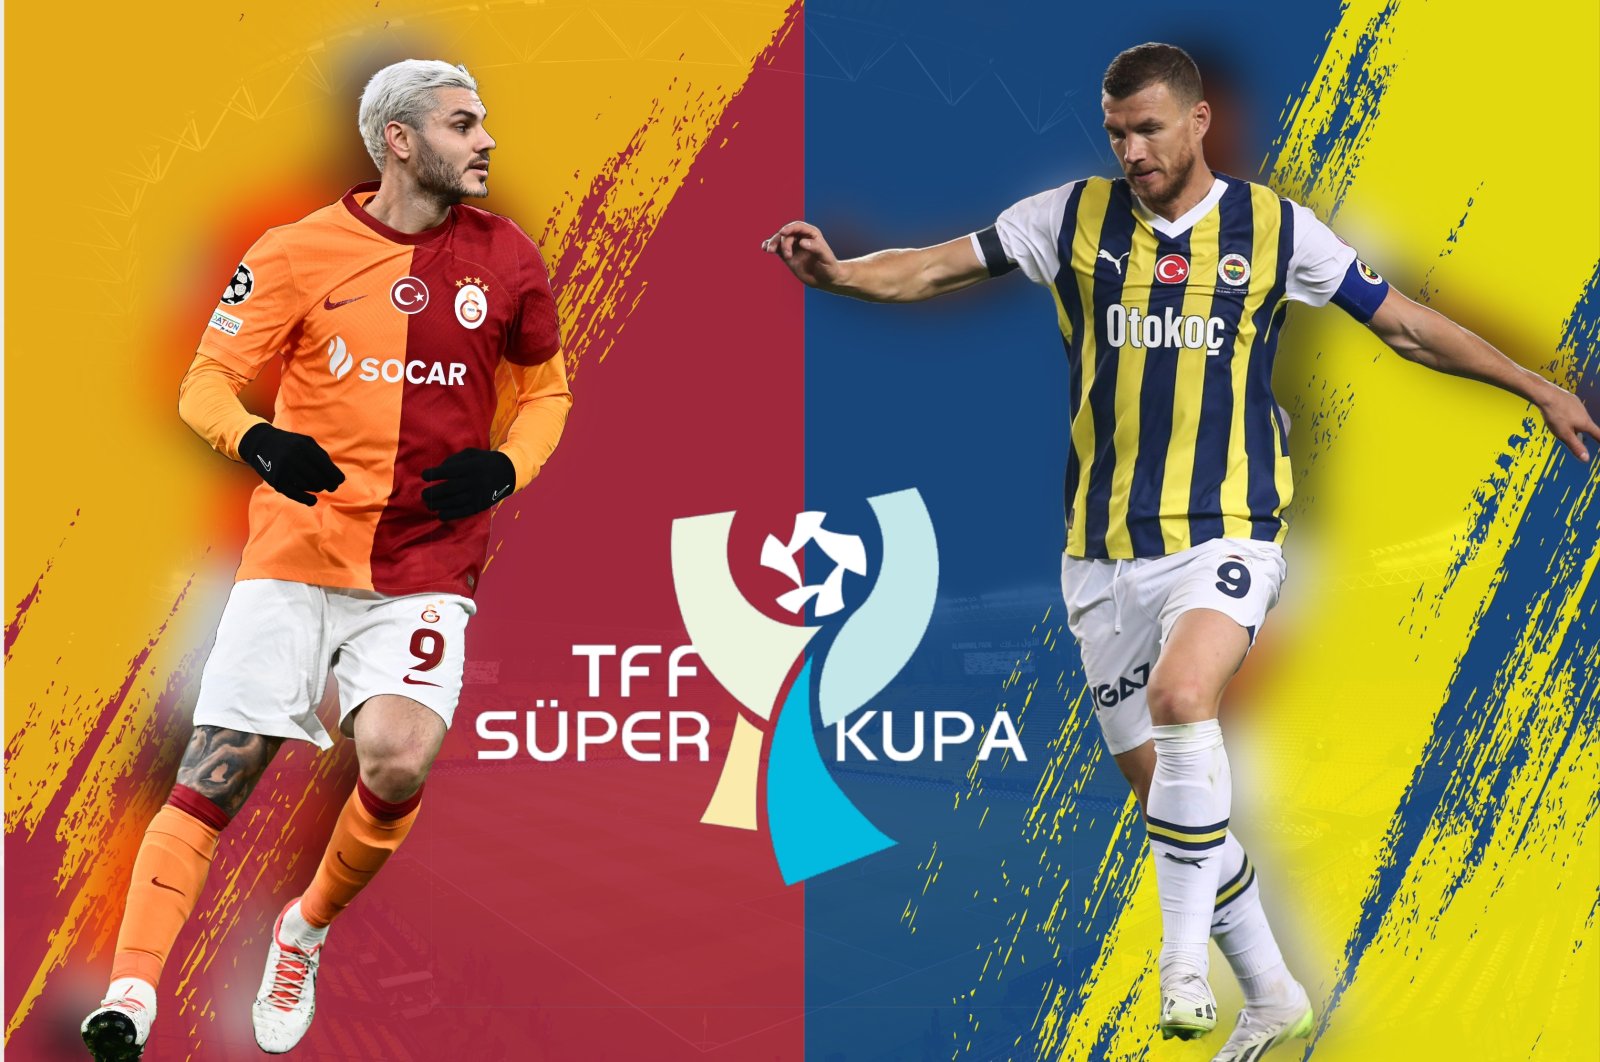 The illustration shows the Turkish Süper Cup logo between Galatasaray's Mauro Icardi (L) and Fenerbahçe's Edin Dzeko. (Illustration by Kelvin Ndunga)